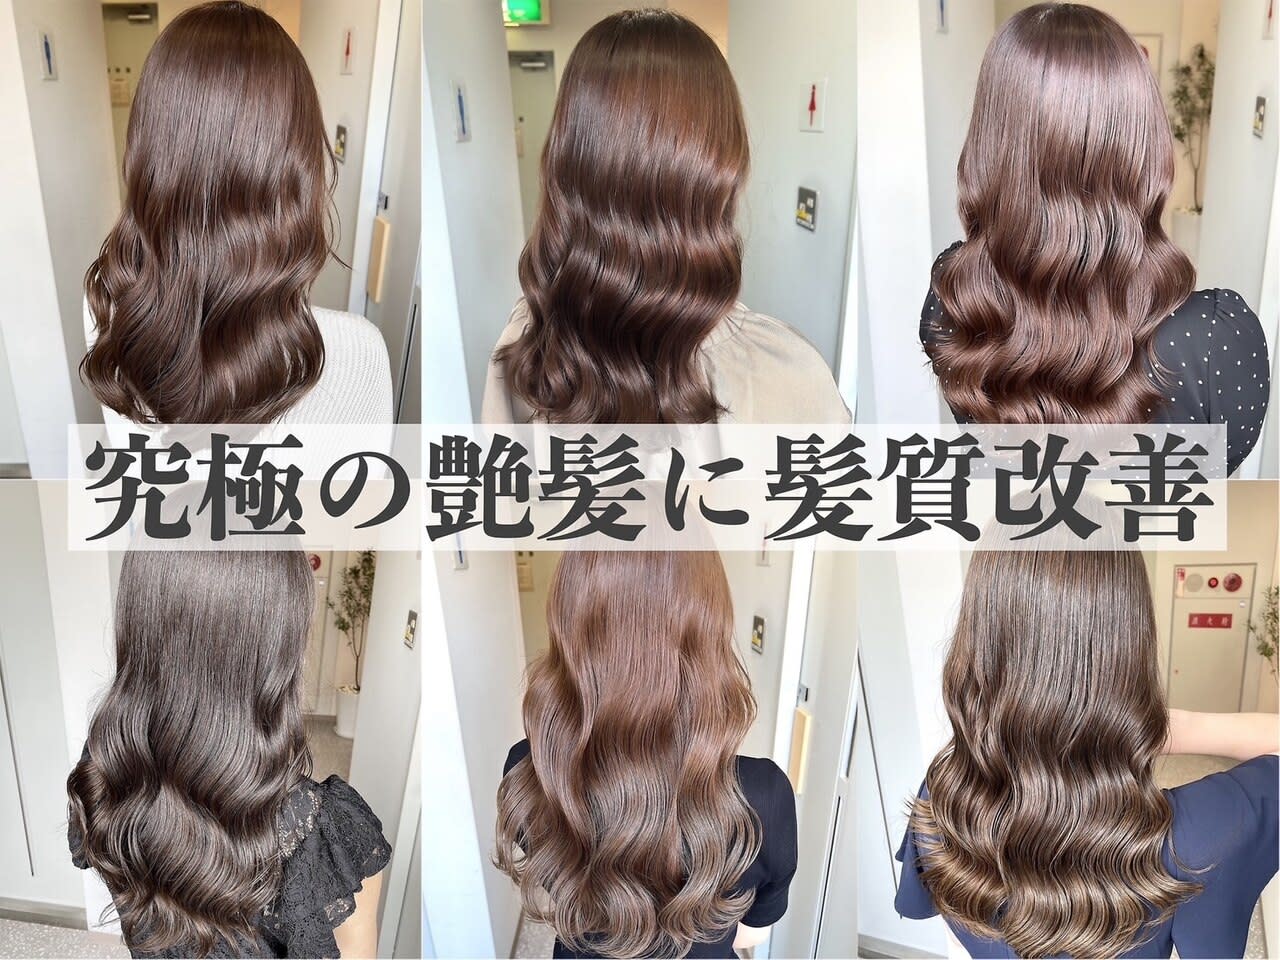 tocca hair & treatment 仙台東口のアイキャッチ画像